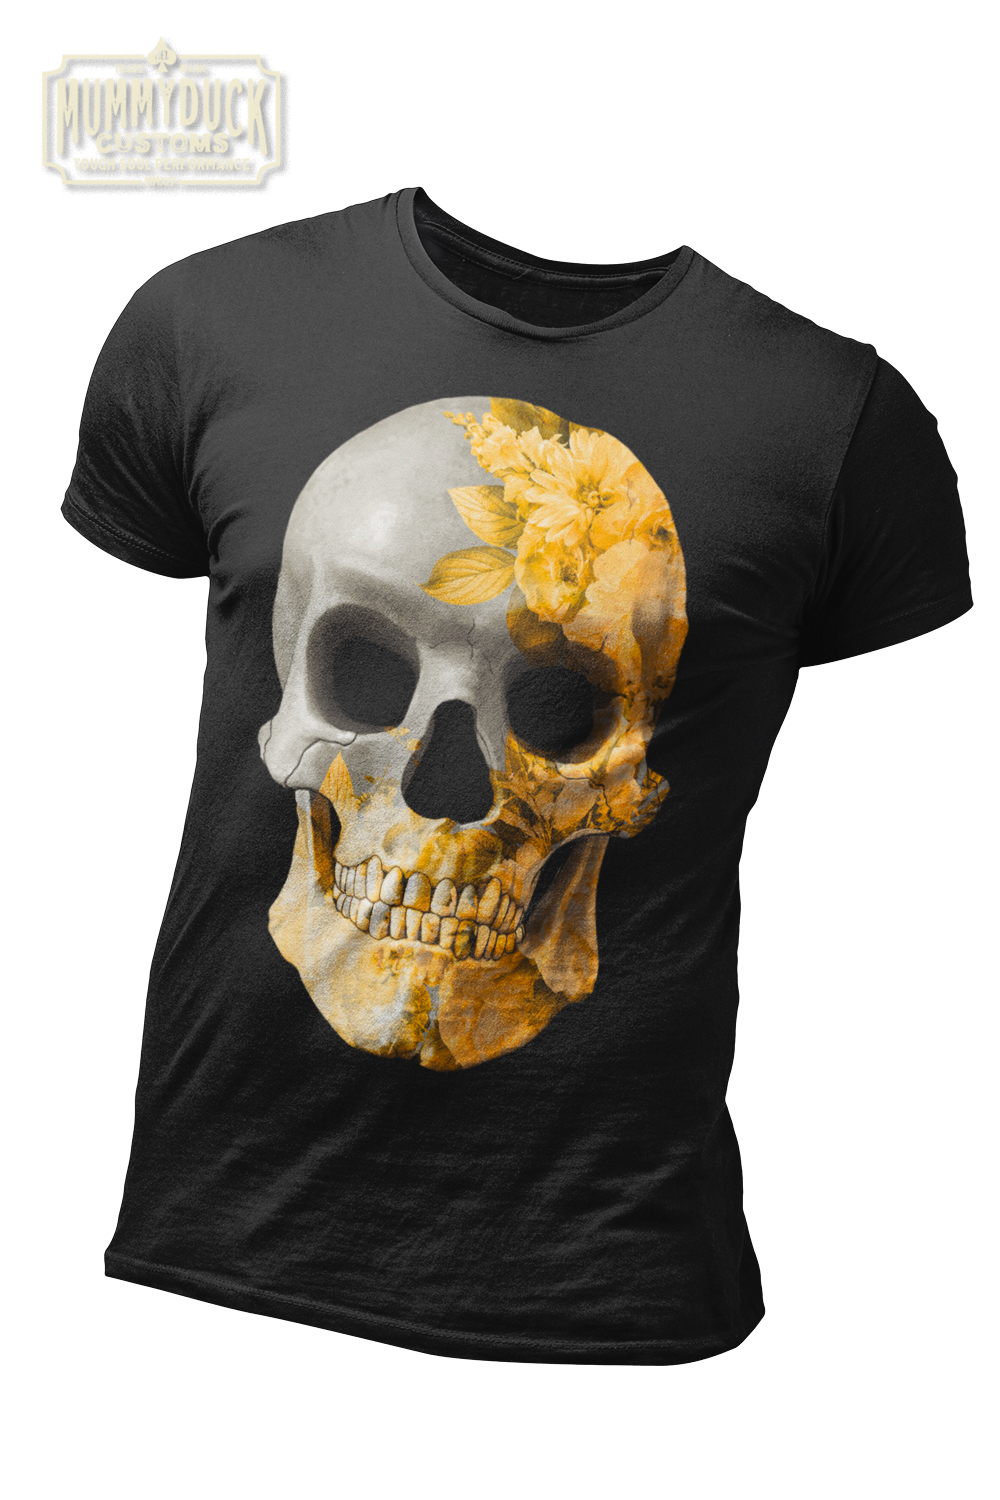 black t-shirt with ligth golden flower texture grey skull